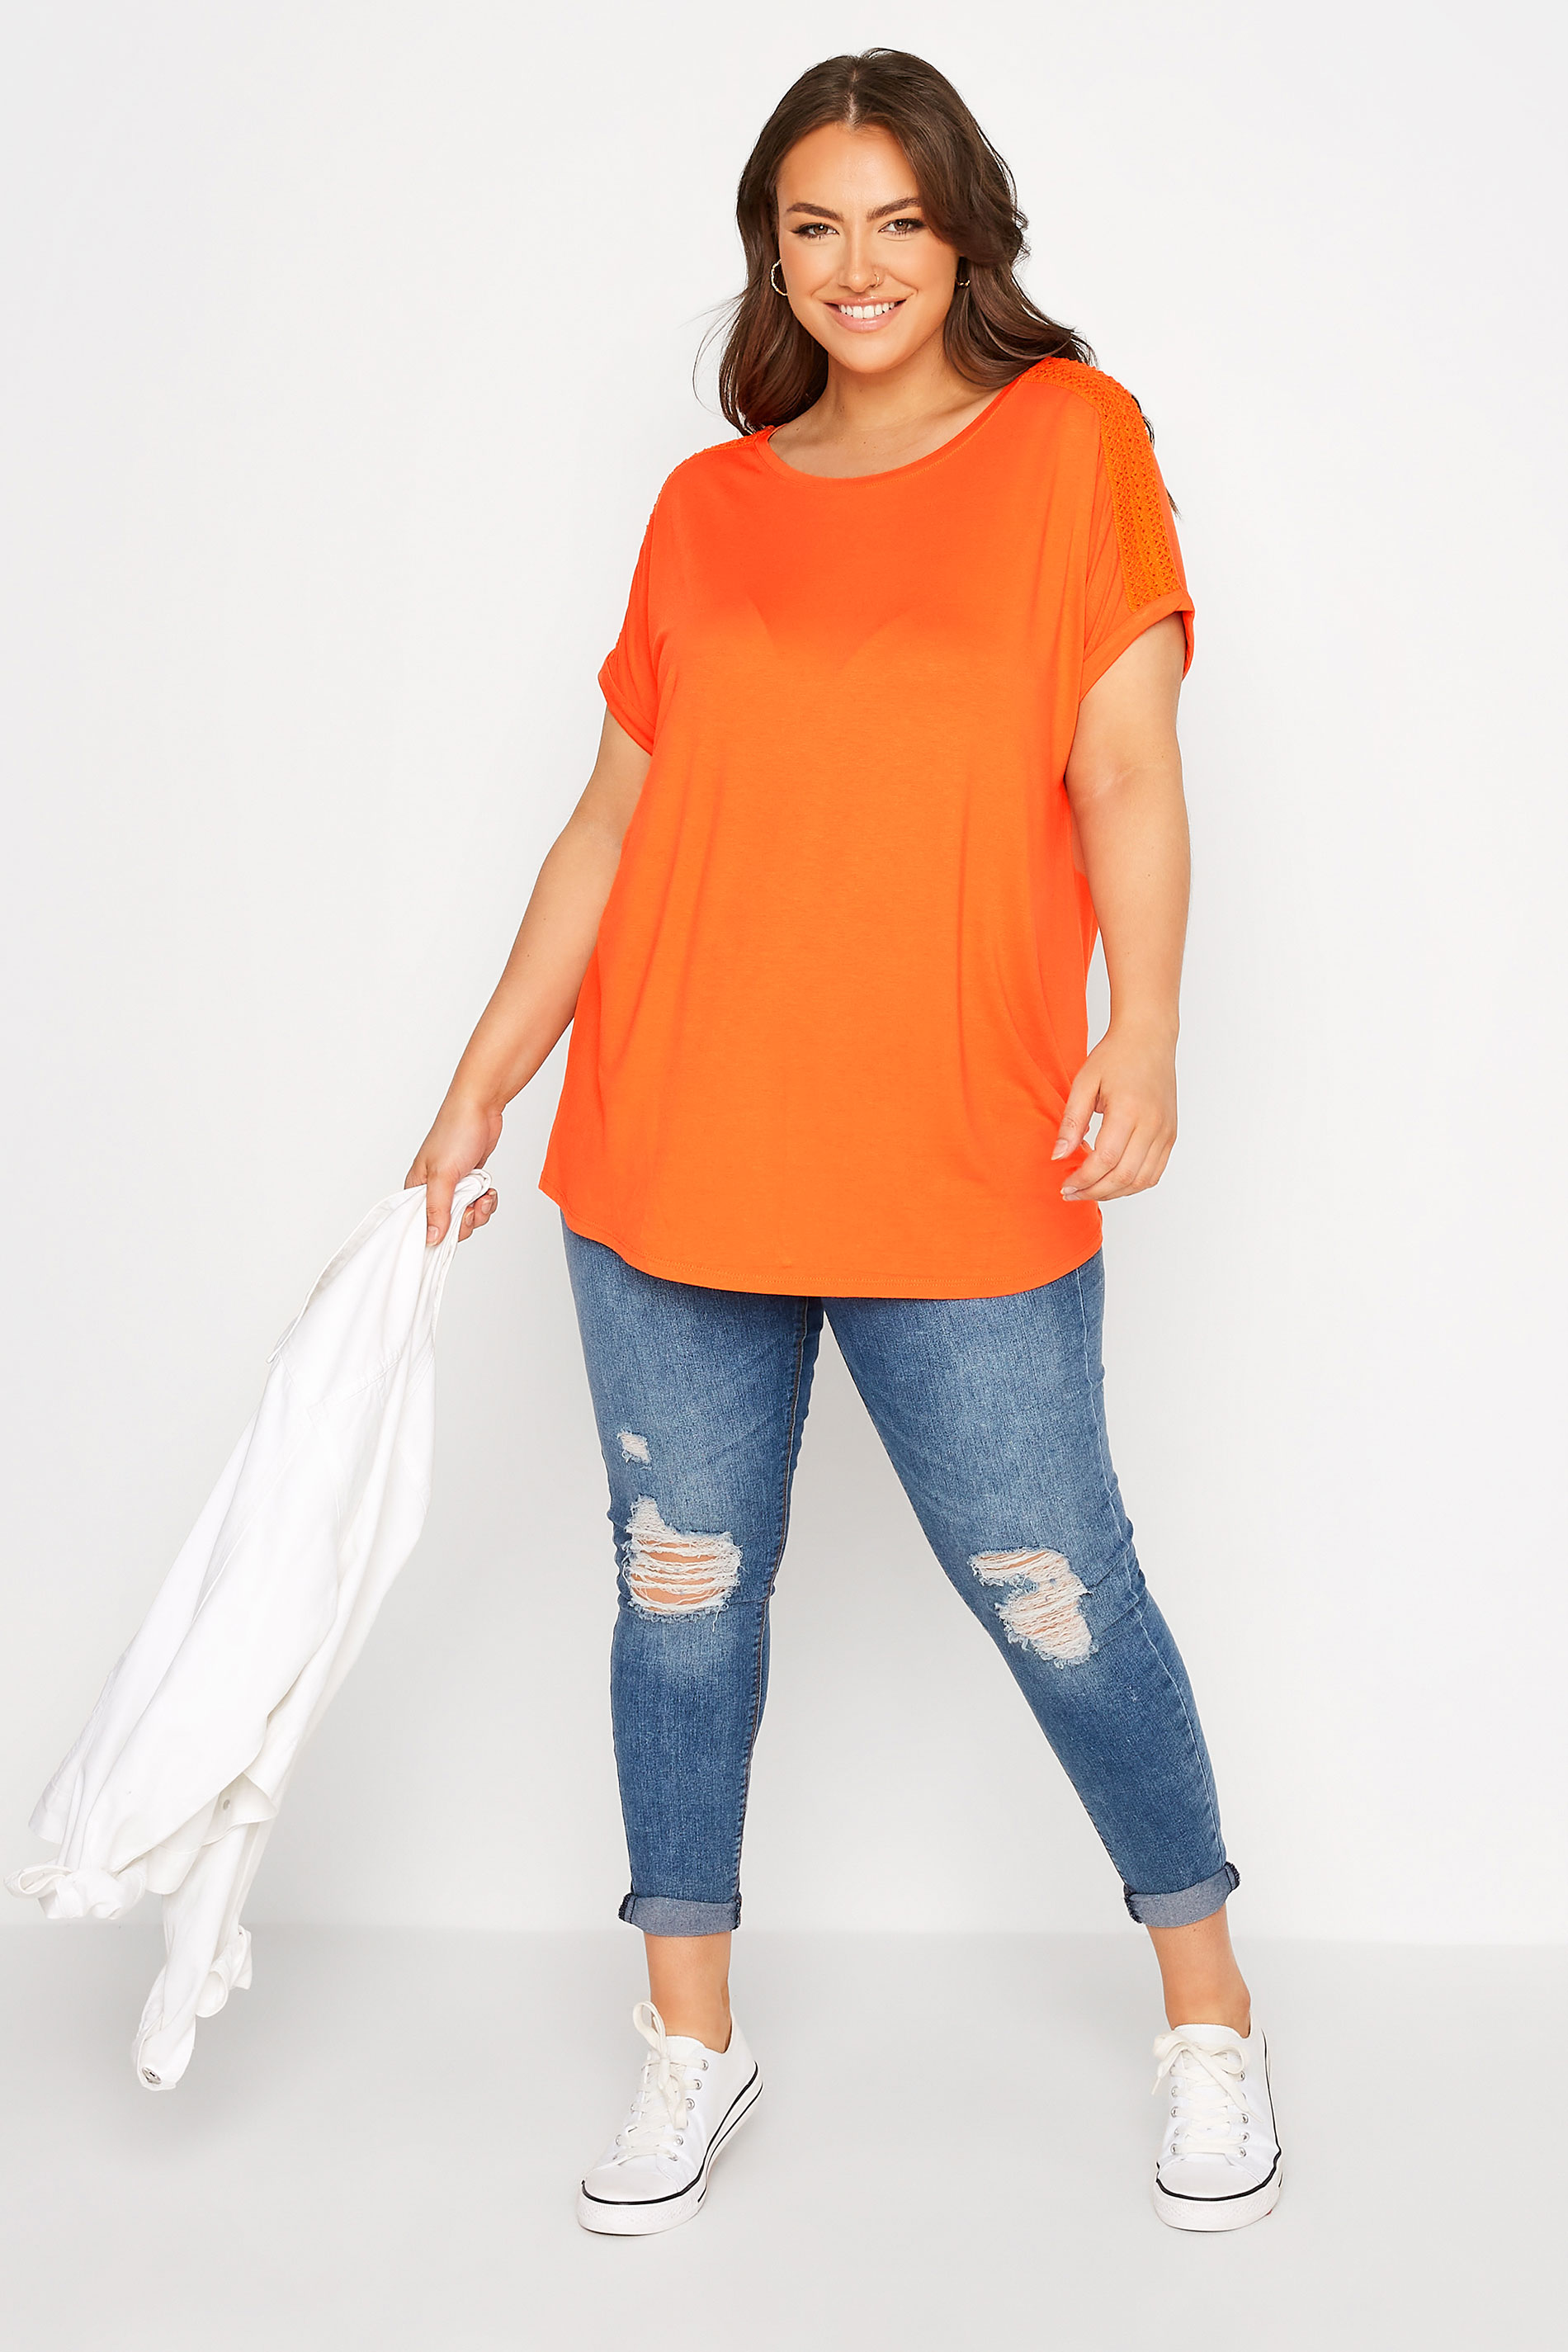 Grande taille  Tops Grande taille  T-Shirts | T-Shirt Orange Manches Courtes à Crochet - MU09021